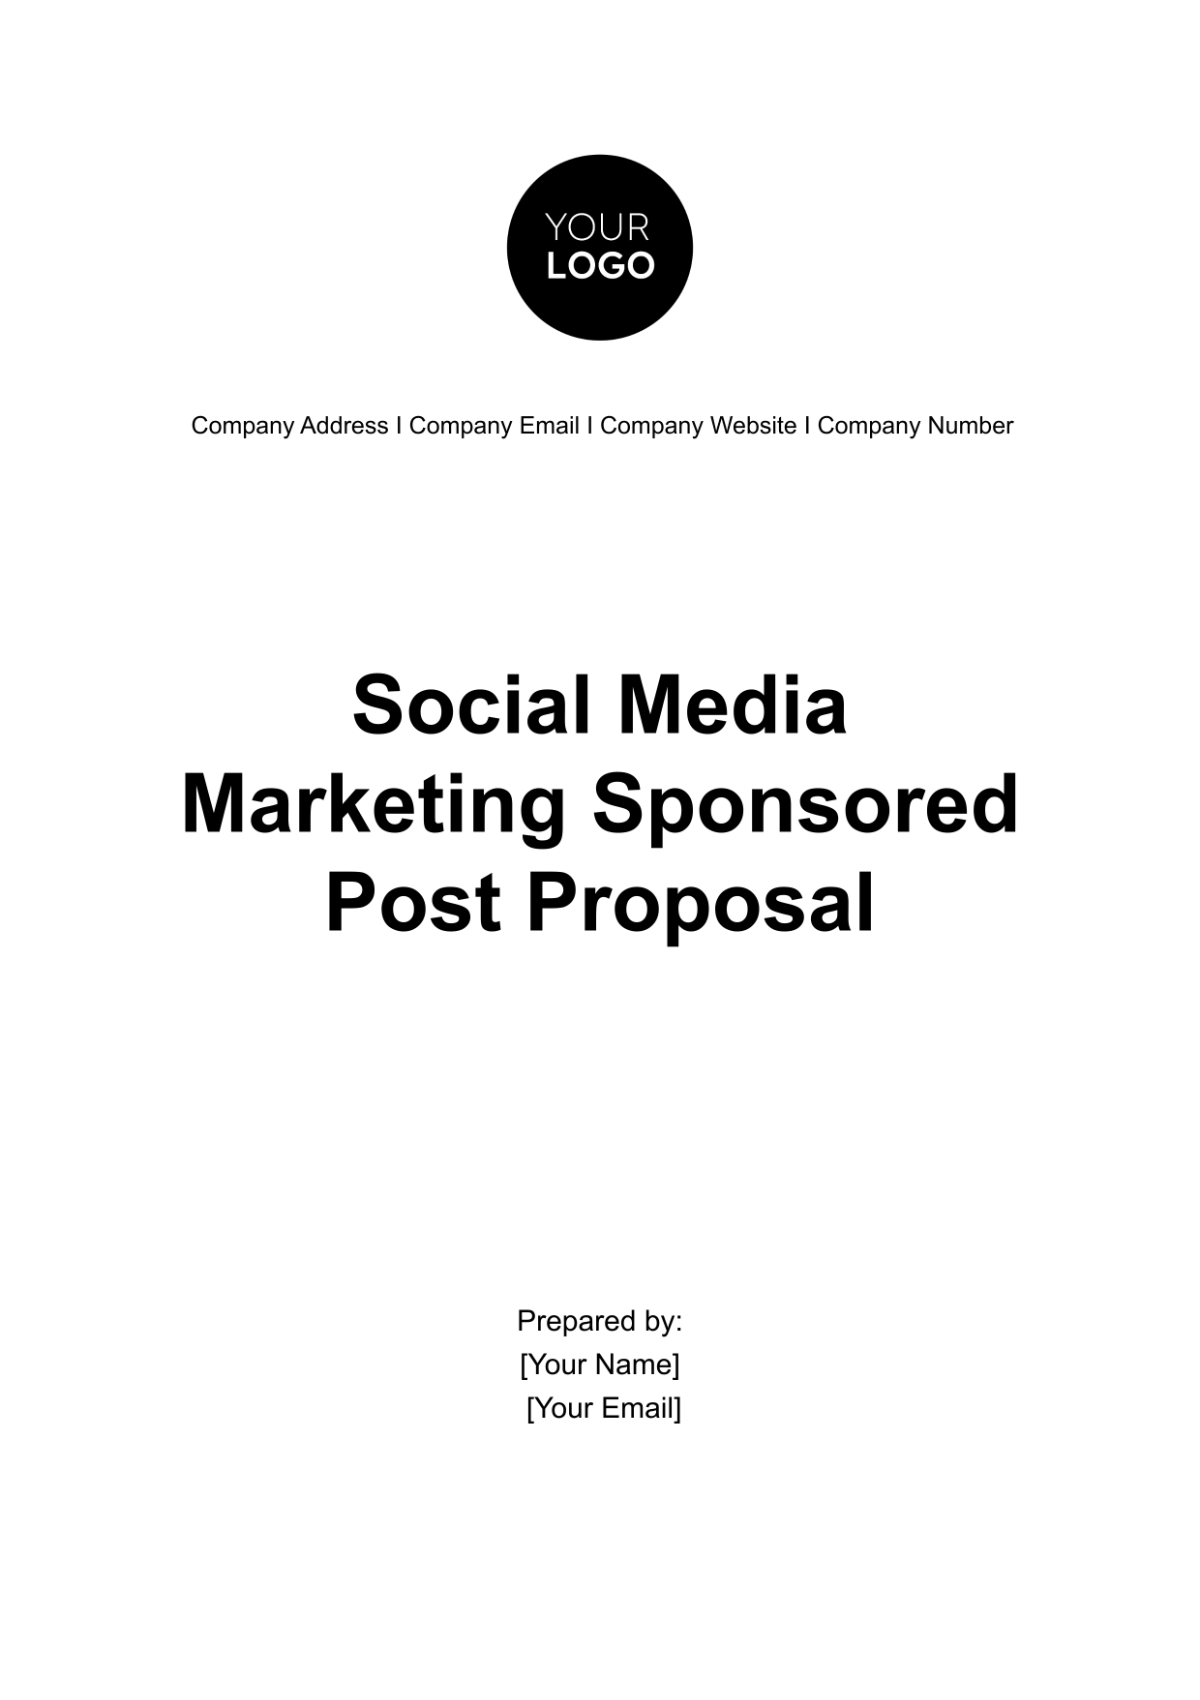 Free Social Media Marketing Sponsored Post Proposal Template